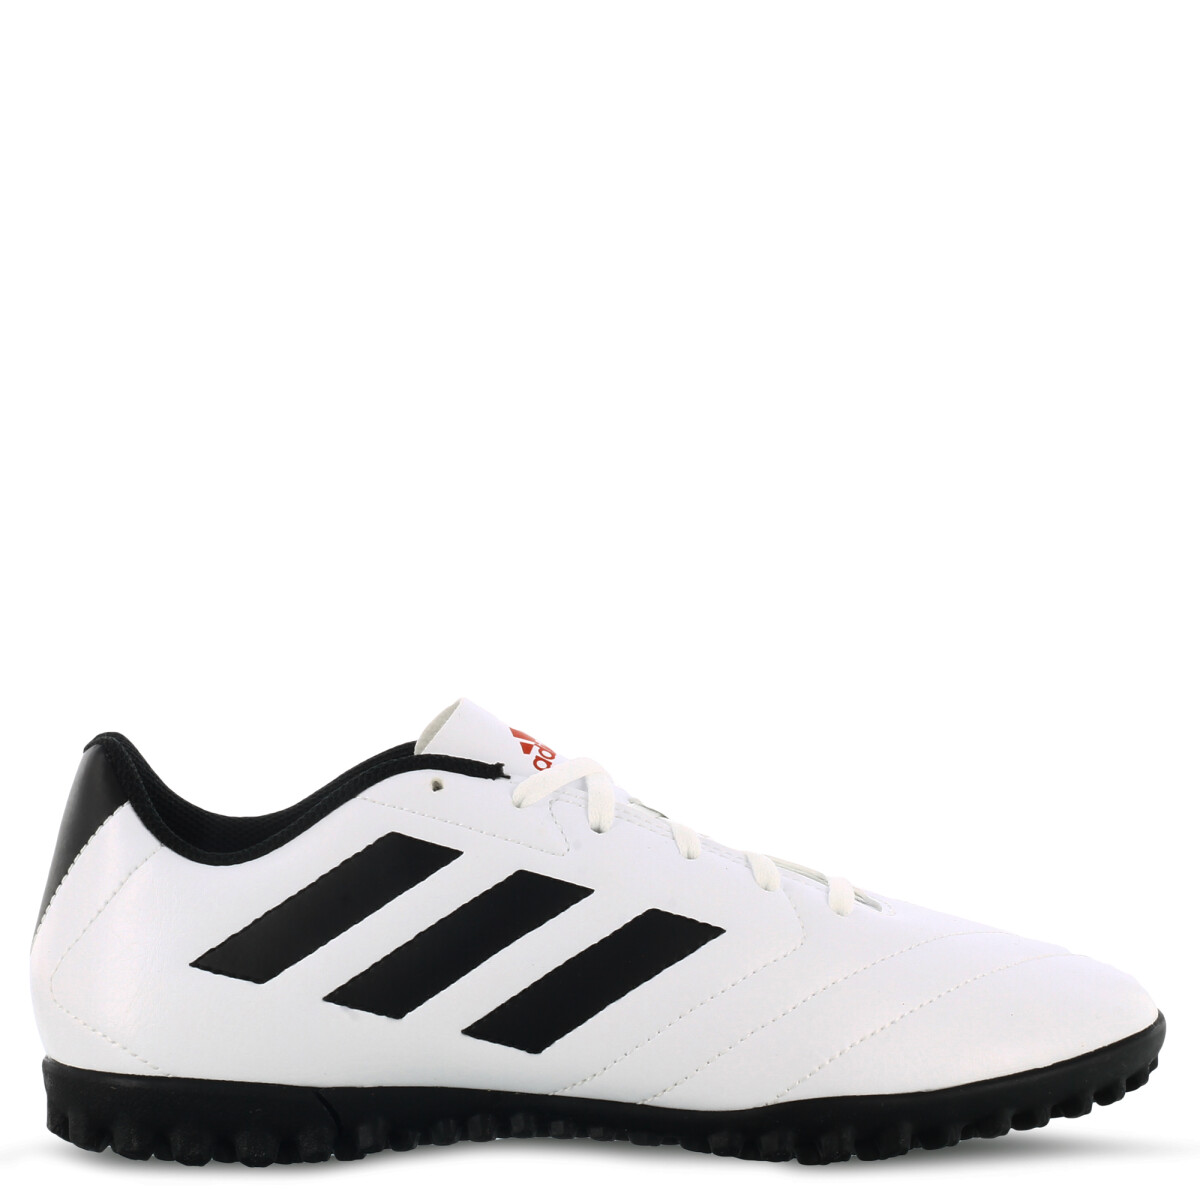 Futbol 5 Goletto VII Adidas - Blanco/Negro 